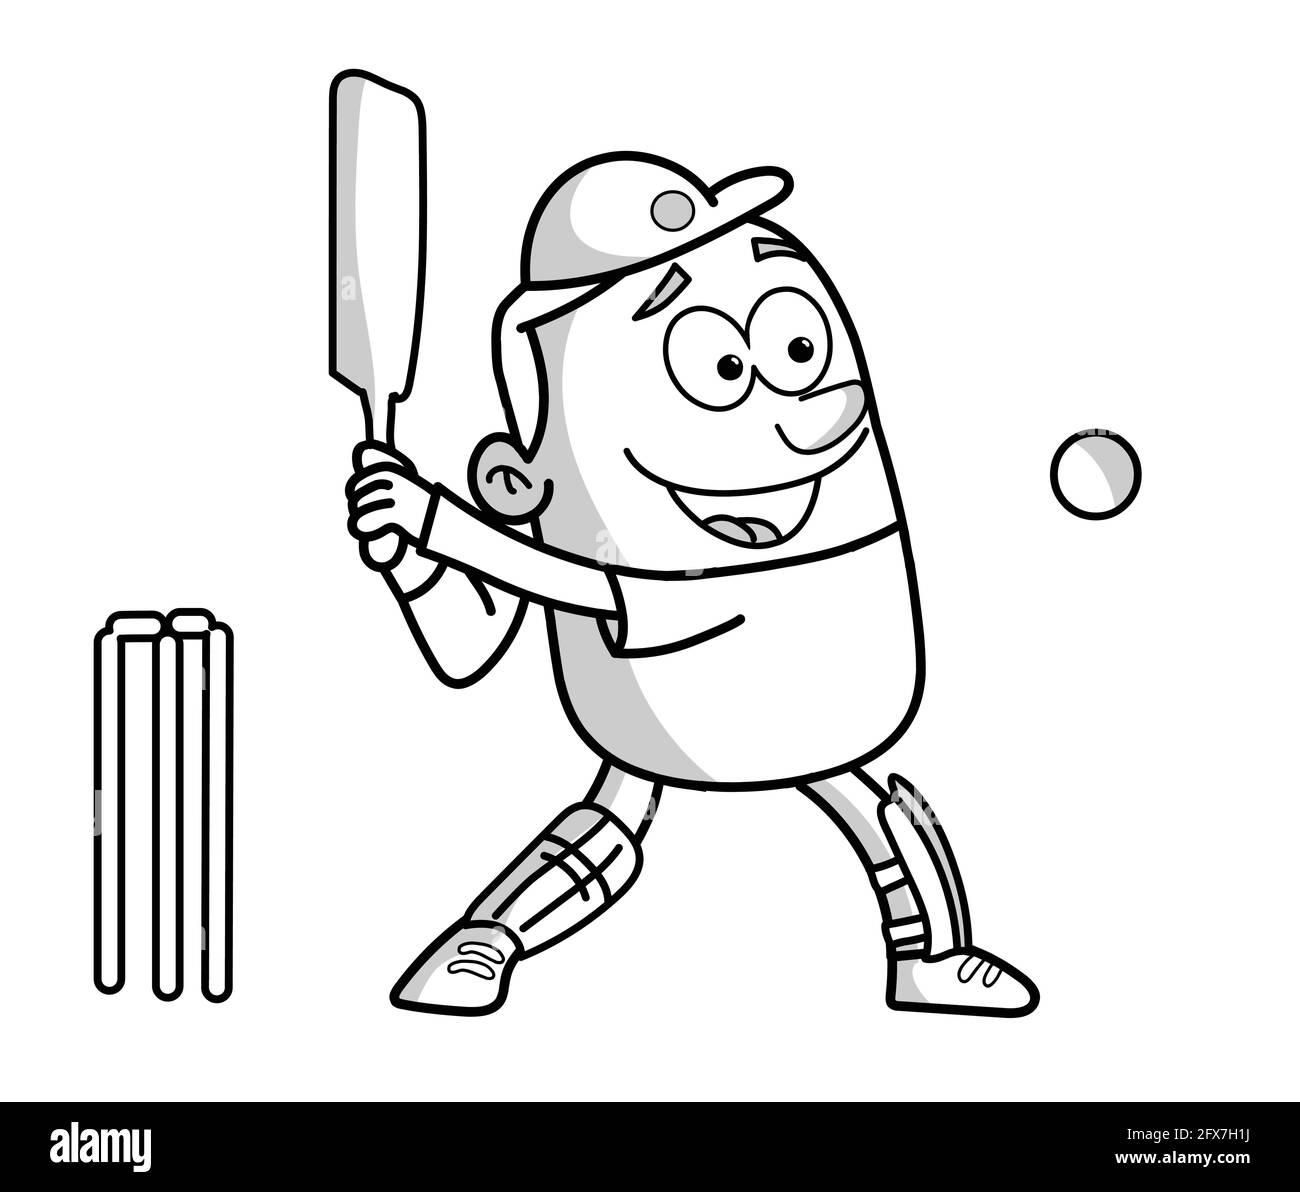 Cricket bats man cartoon Cricket player vector illustration Stock Vector  Image & Art - Alamy